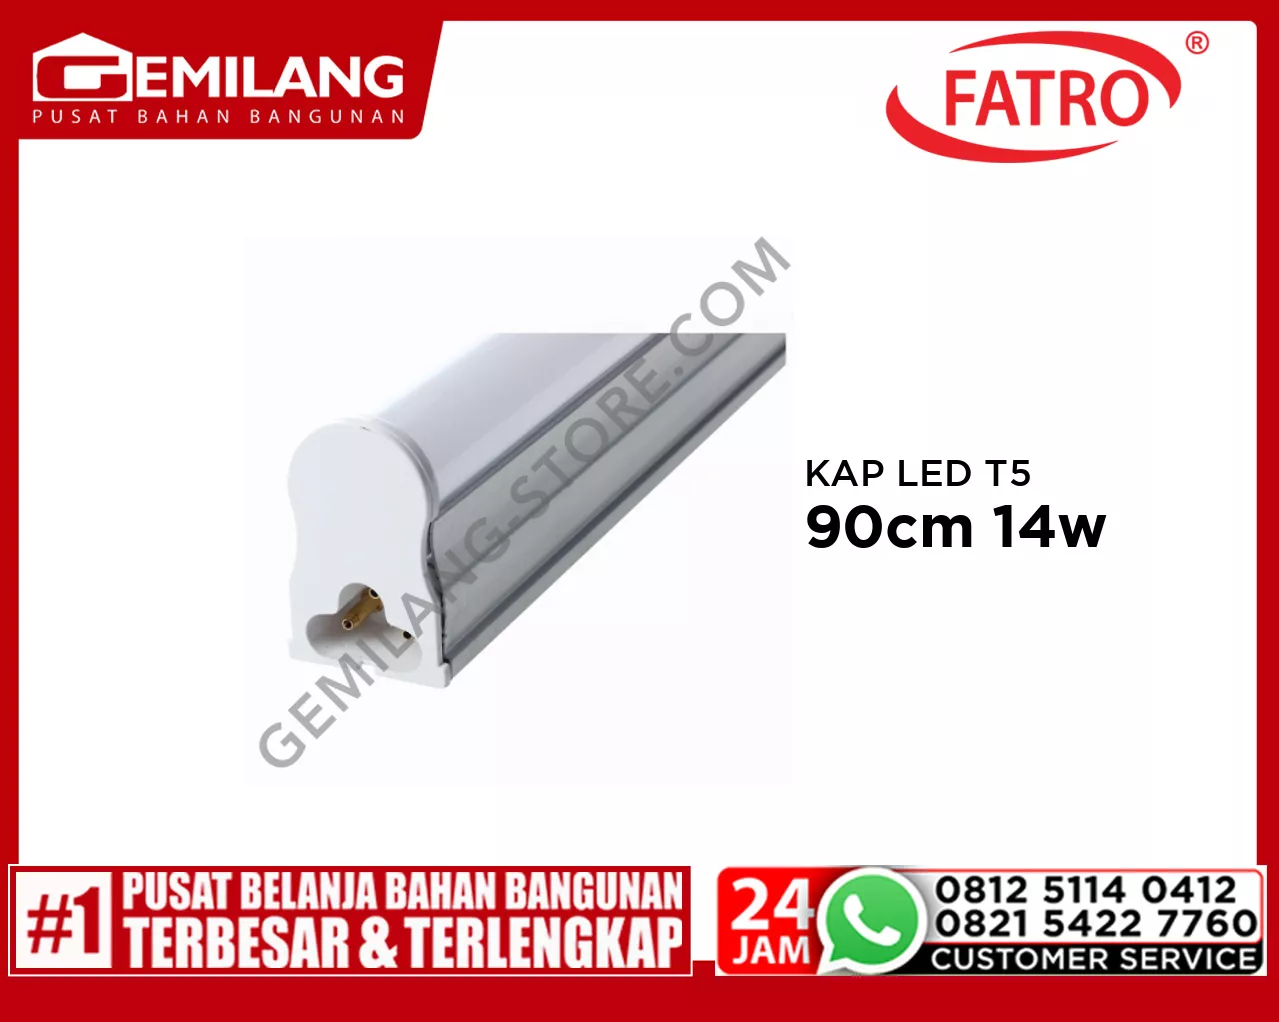 FATRO KAP LED T5 90cm WH SA 2018 14w